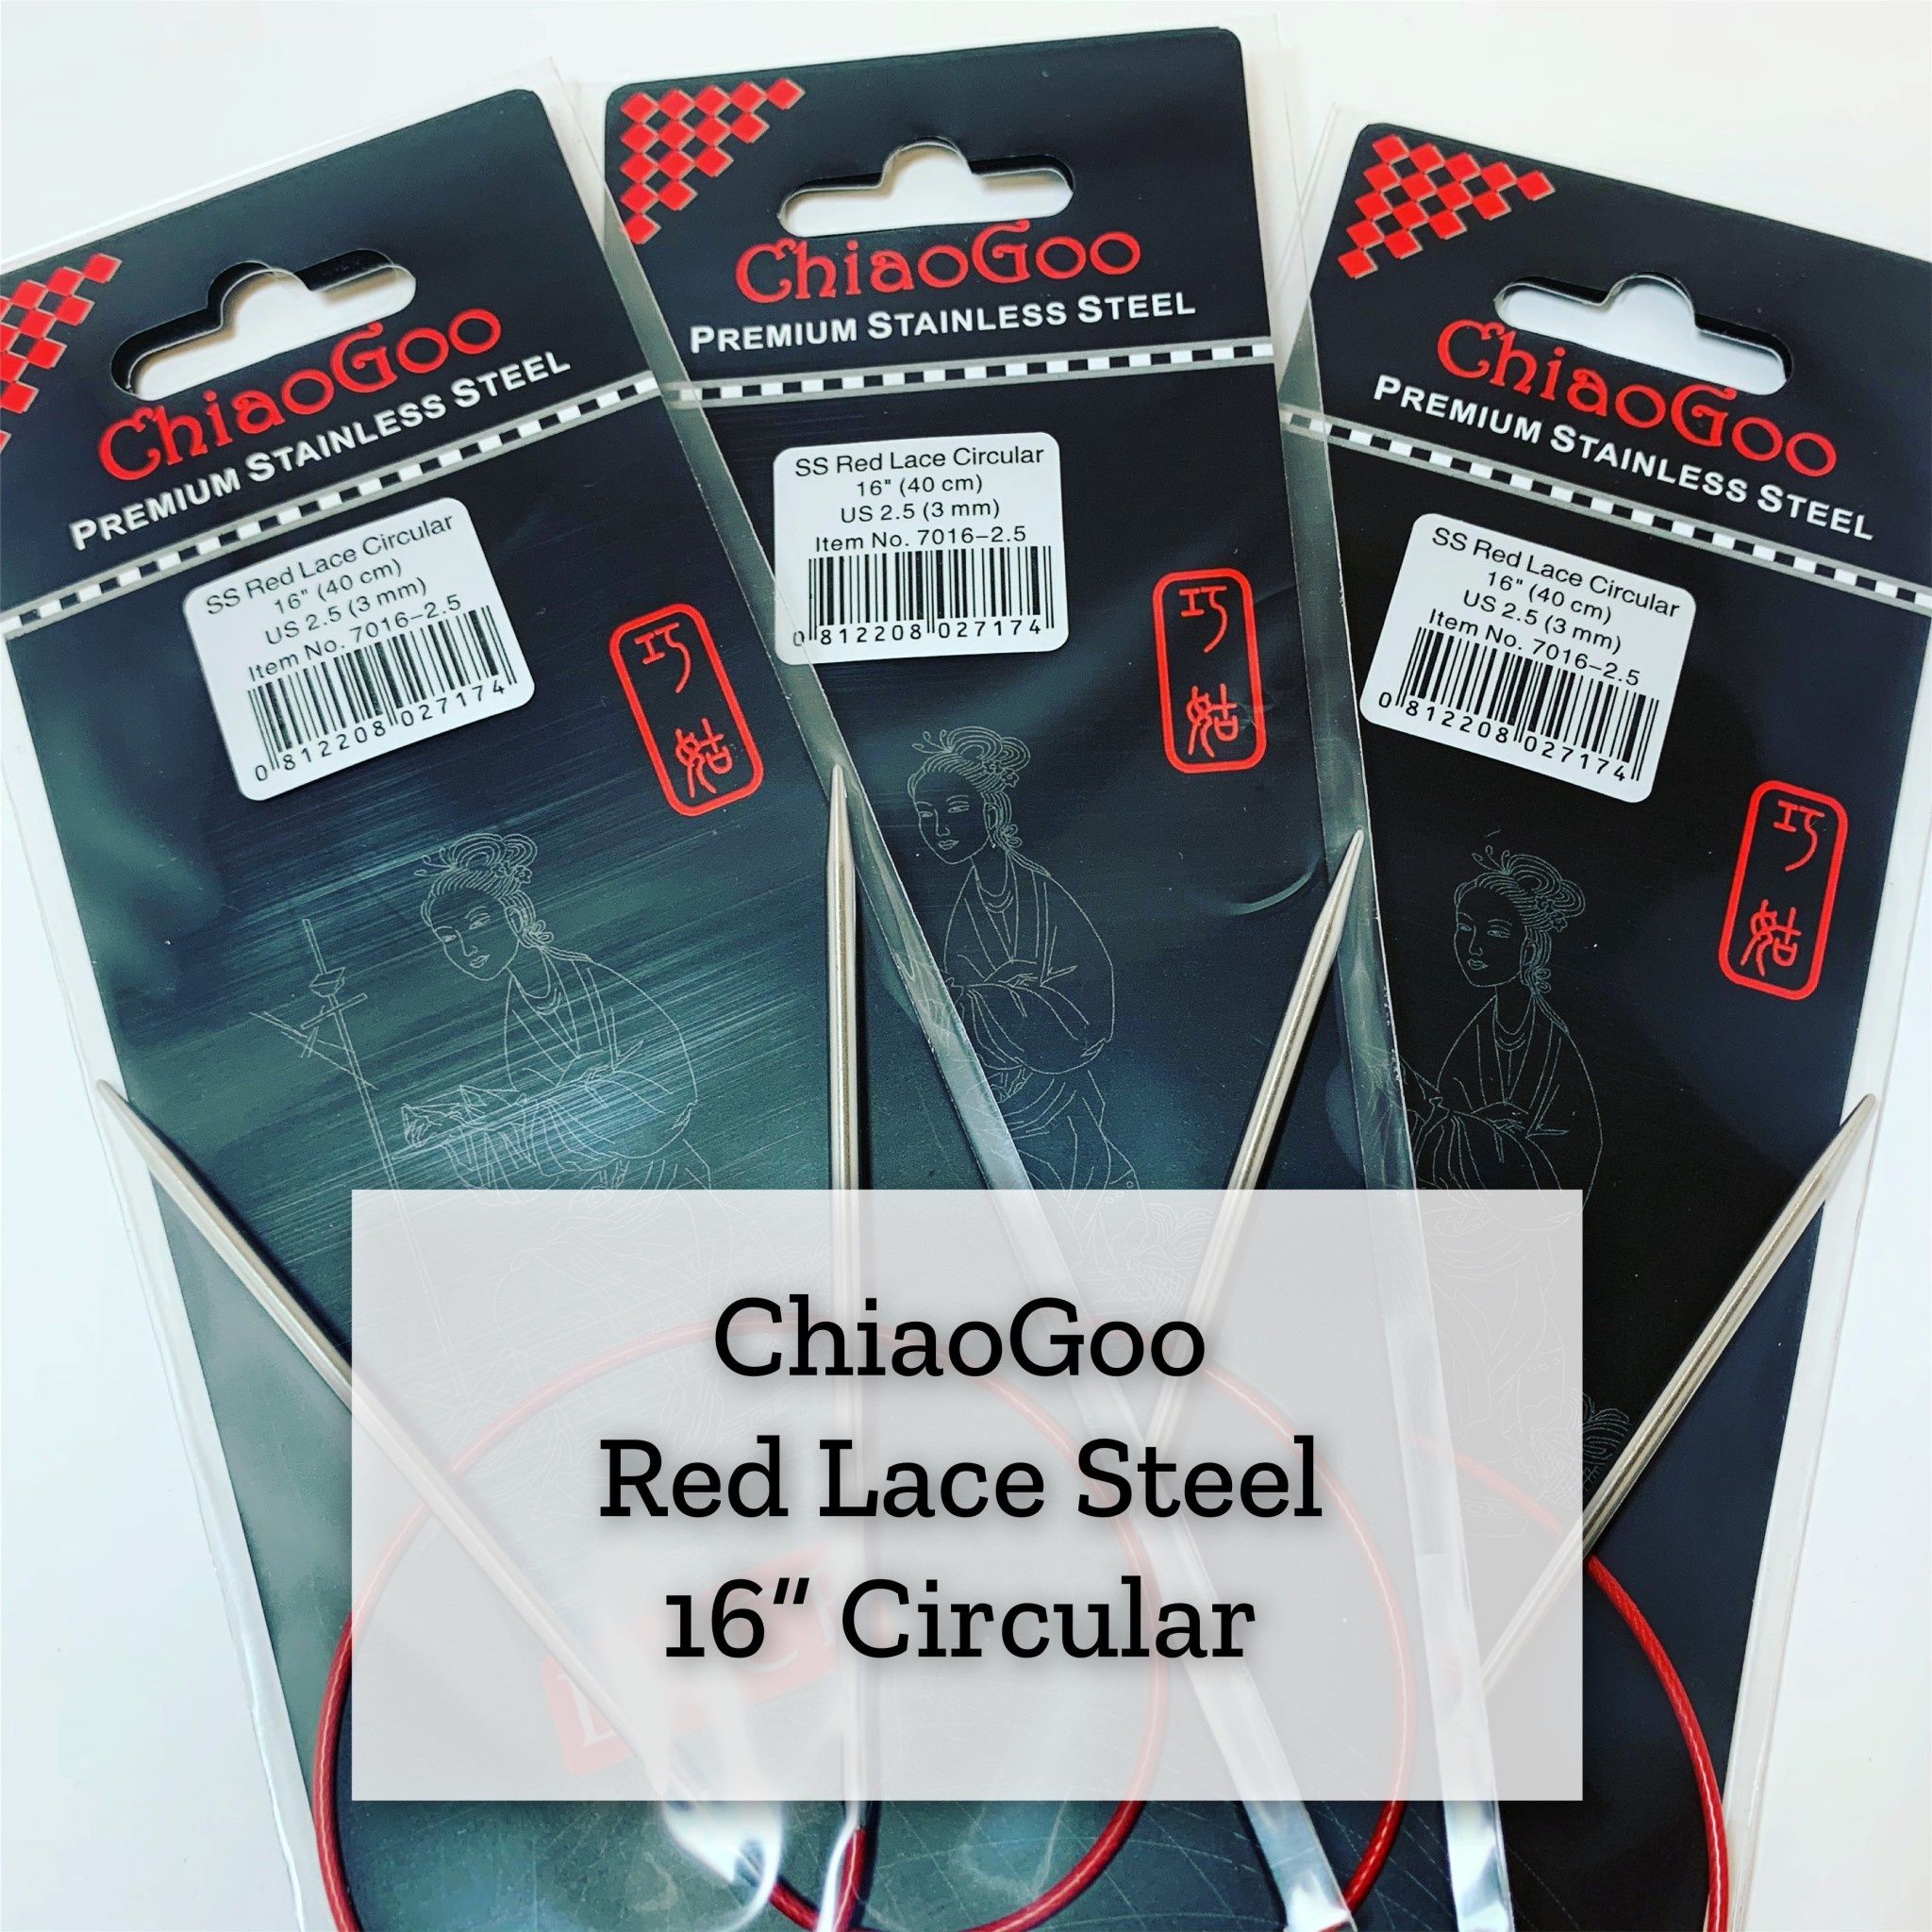 ChiaoGoo Red Lace Steel - 16" 3.25 mm